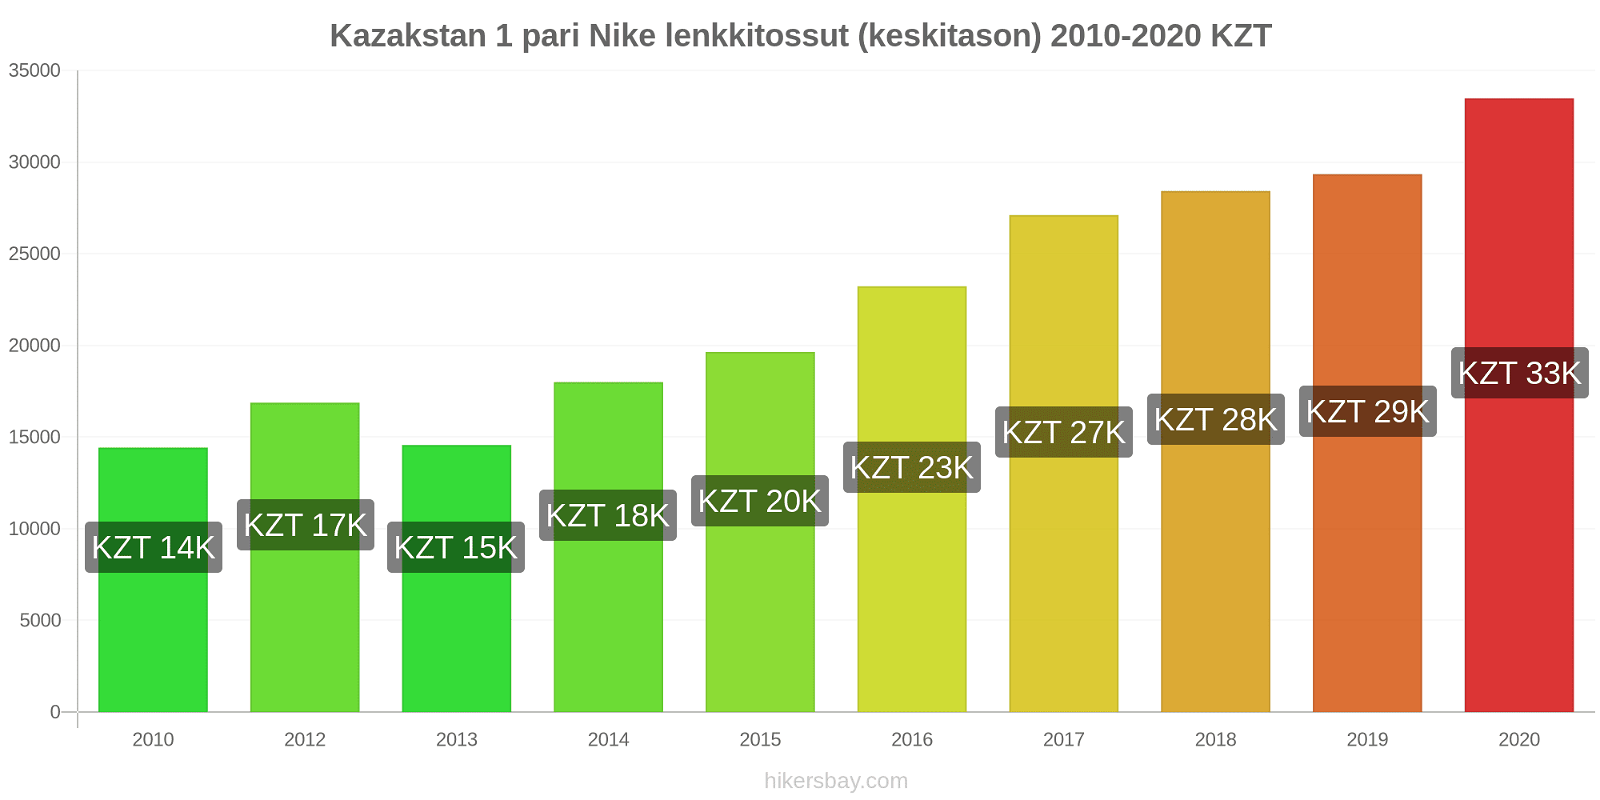 Kazakstan hintojen muutokset 1 pari Nike lenkkitossut (keskitason) hikersbay.com